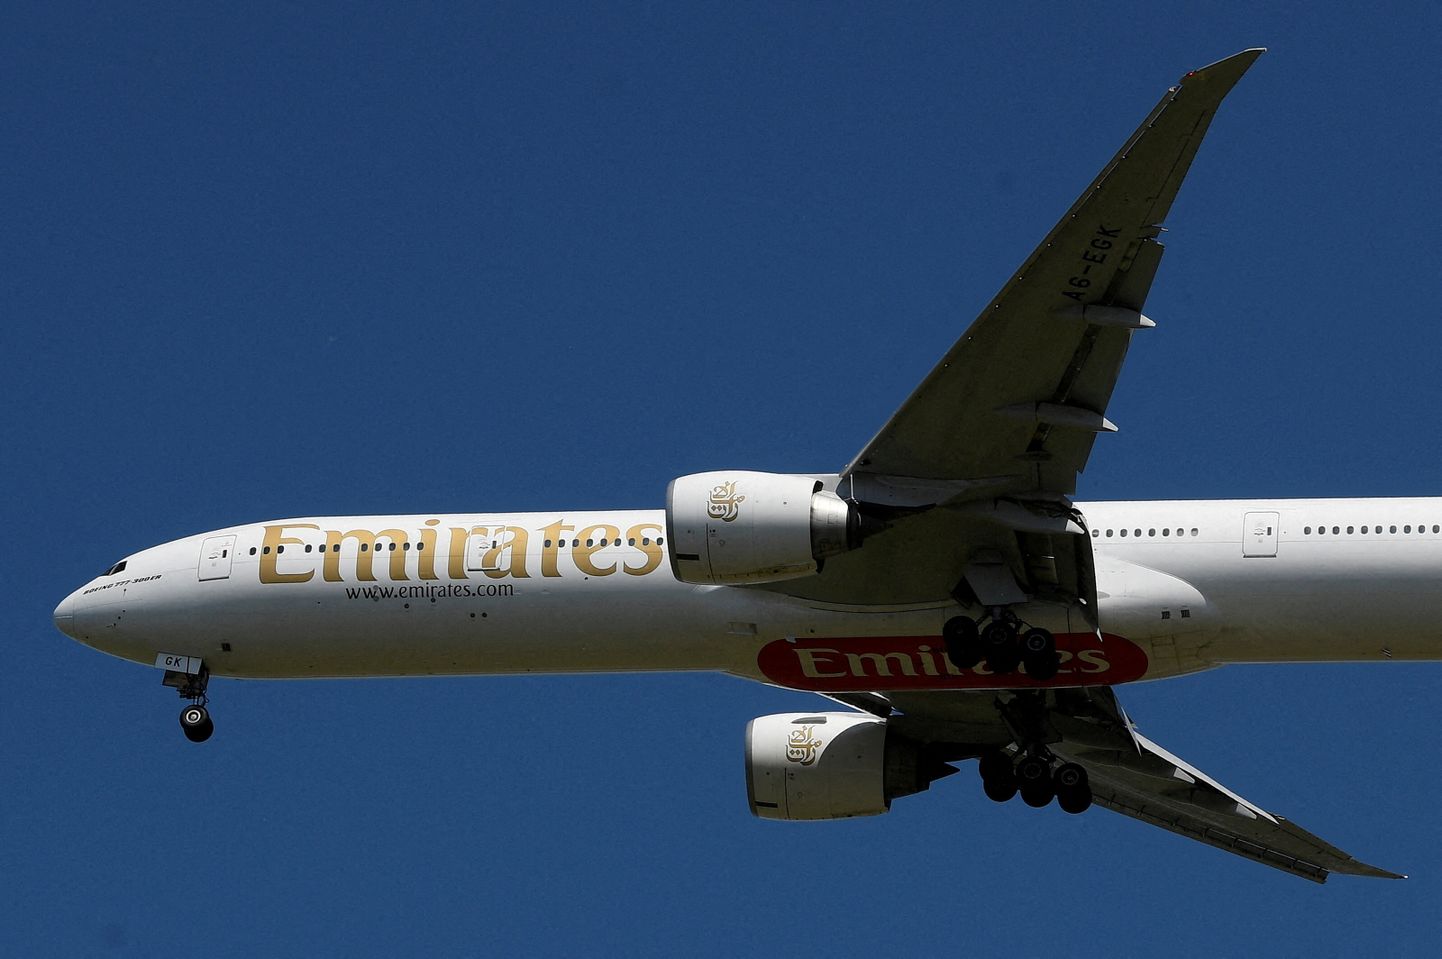 Emirates lennuk.